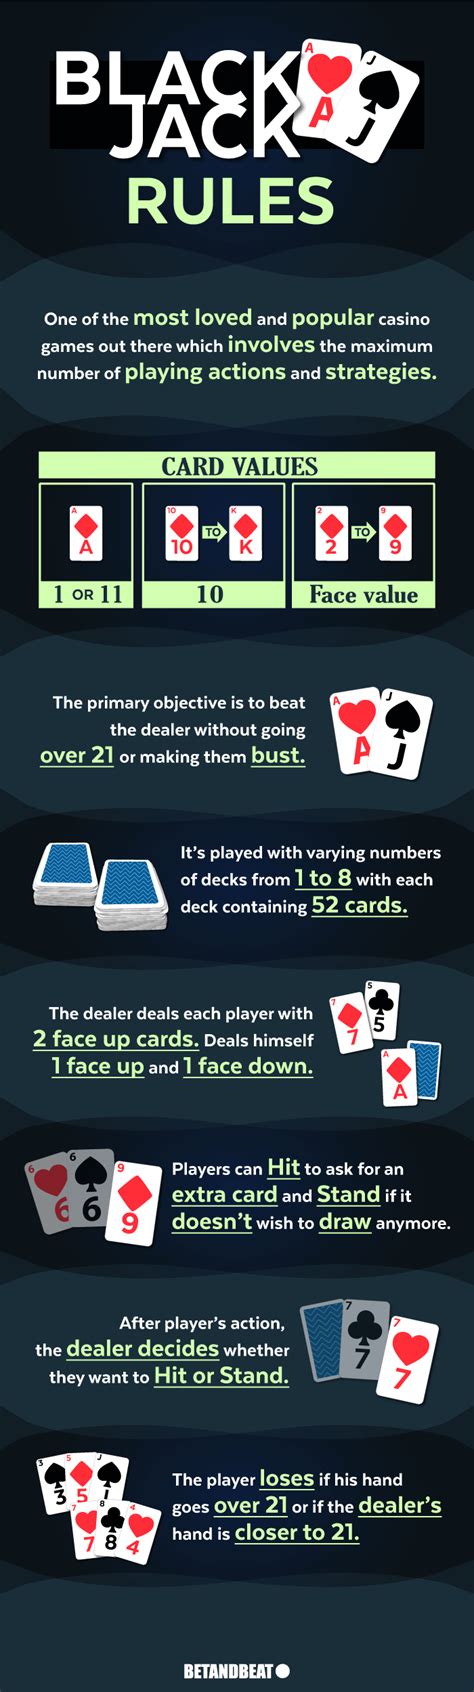 blackjack deck rules gxox canada